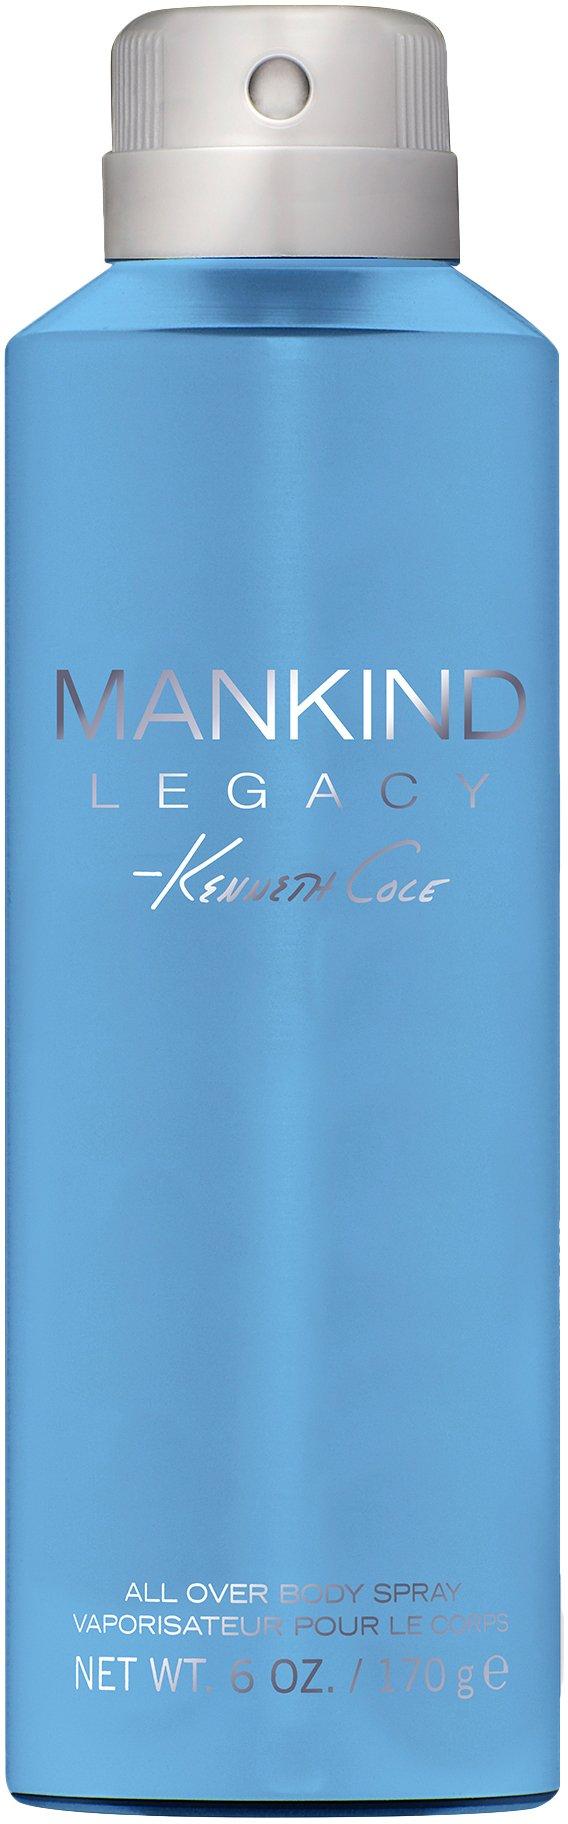 Mankind Legacy Mens 6 fl. oz. Body Spray